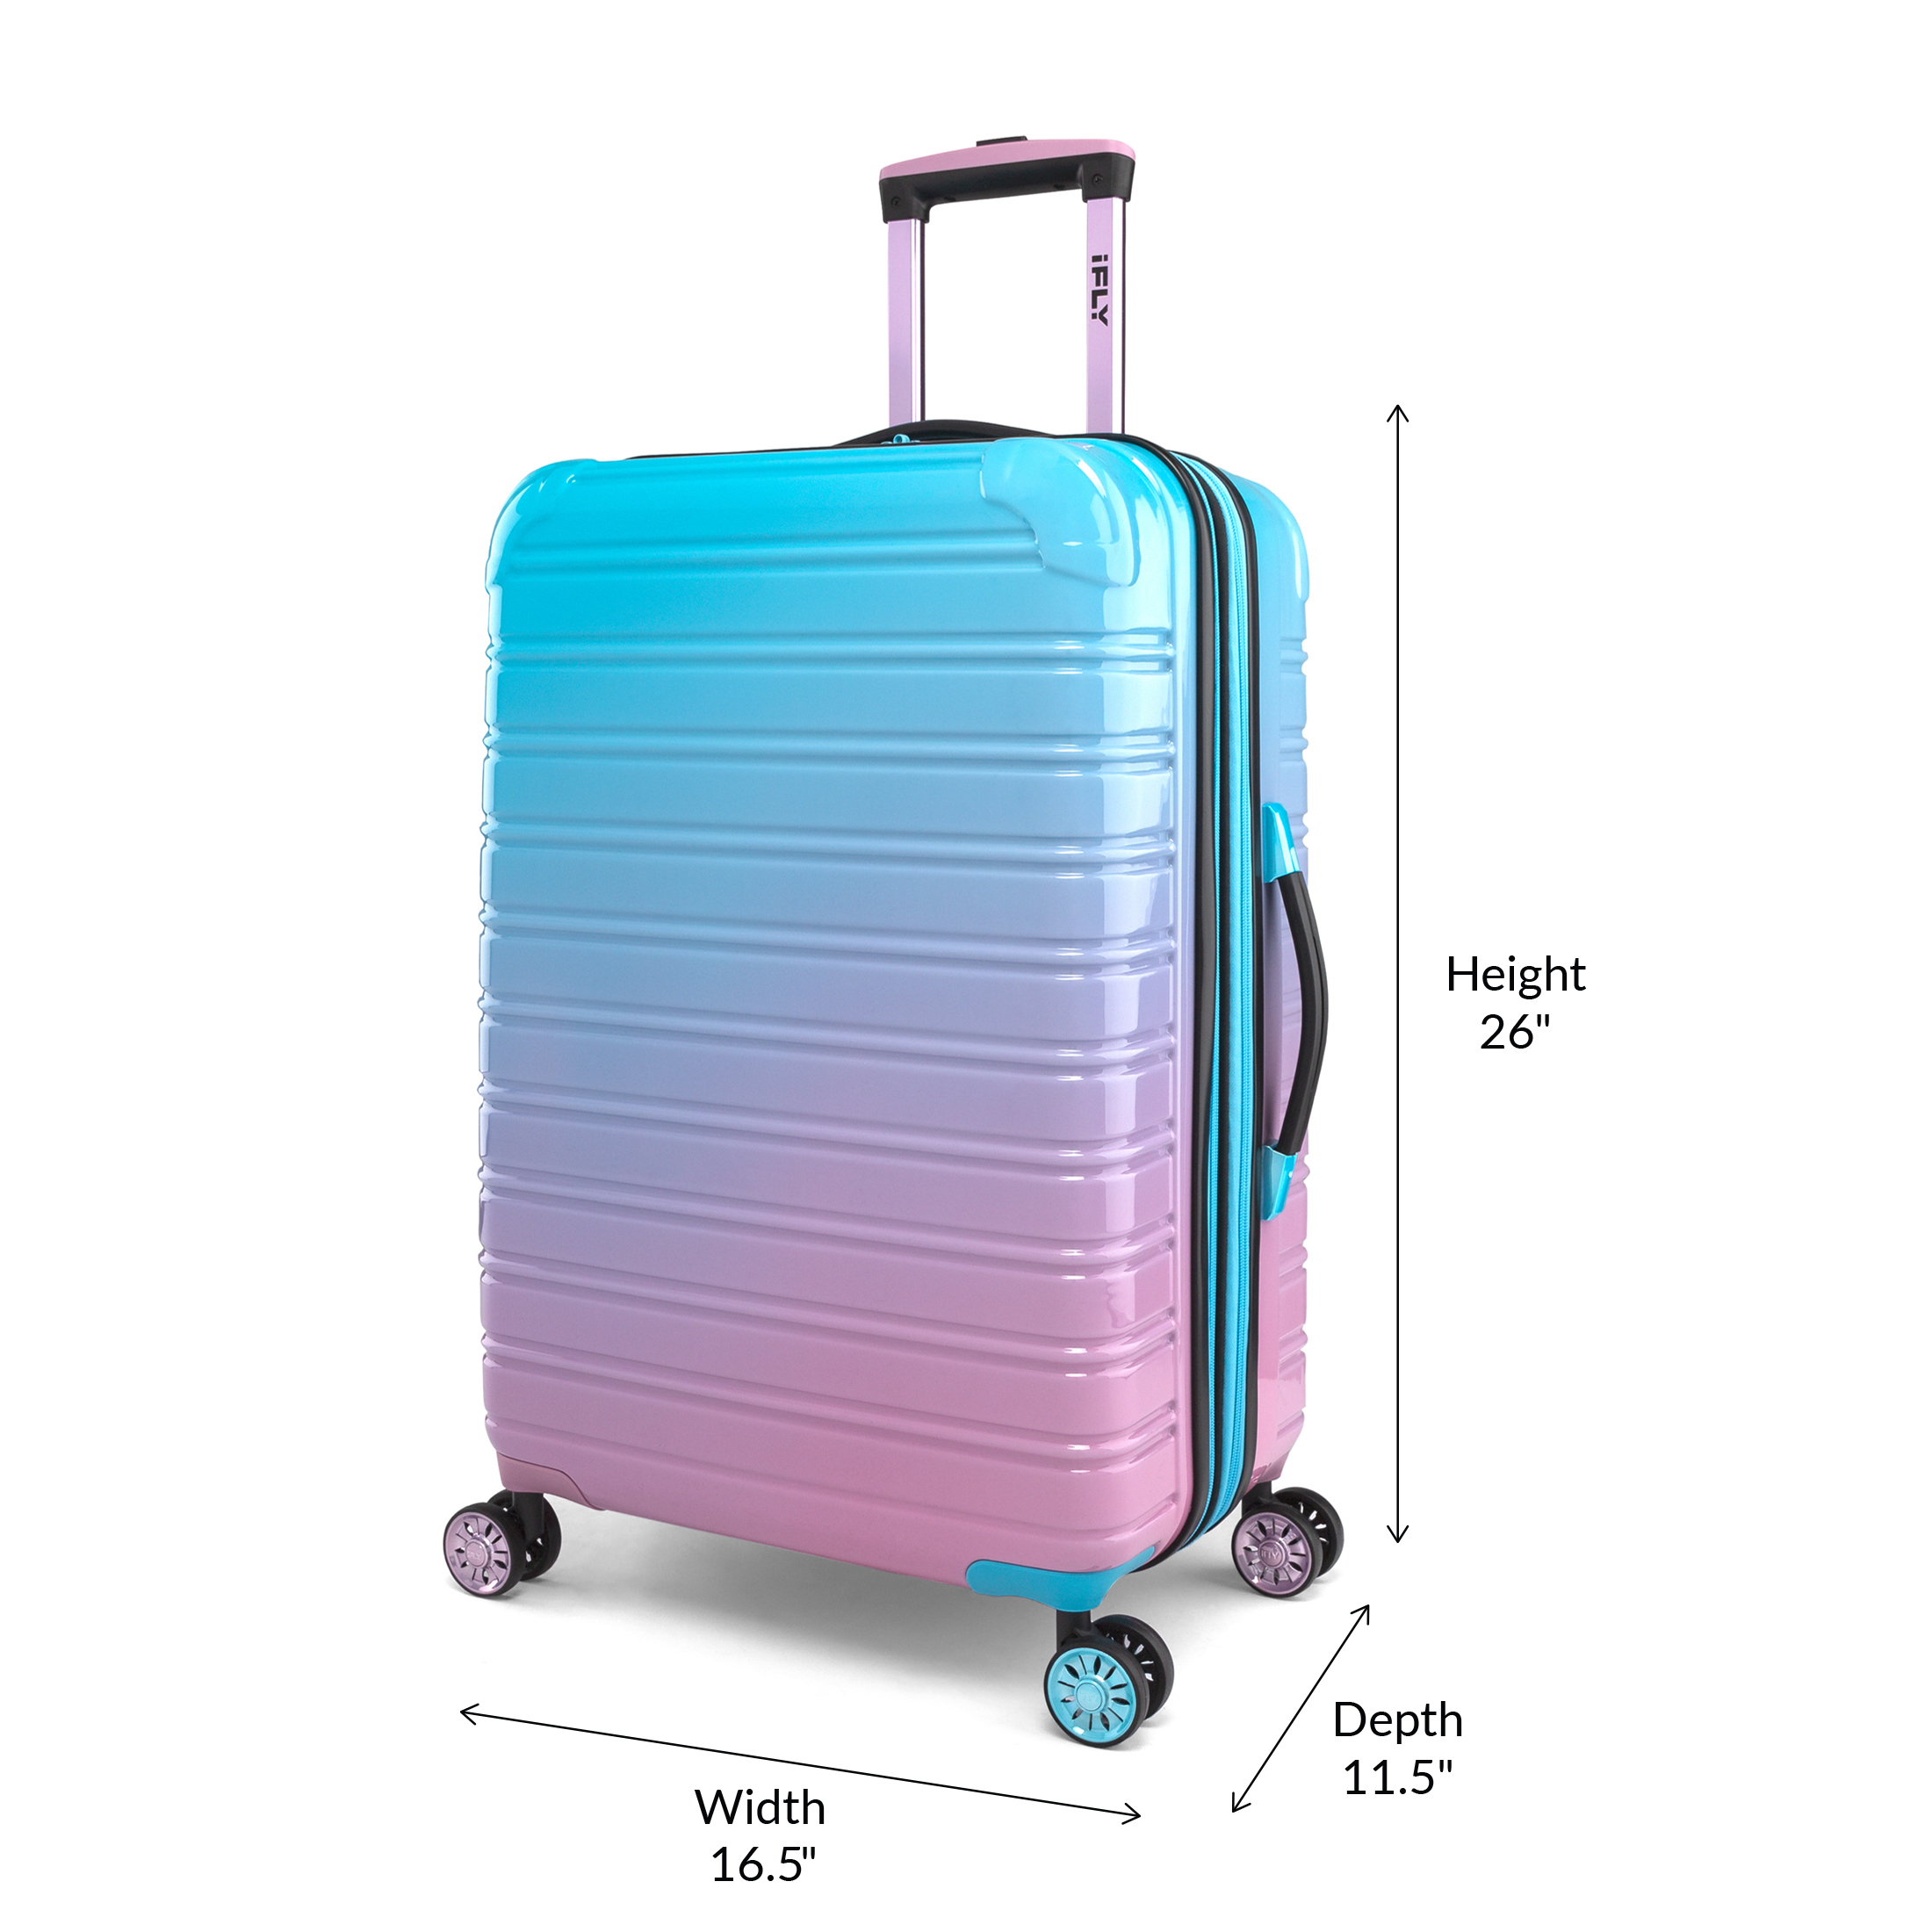 iFLY Hardside Luggage Fibertech 3 Piece Set, 20" Carry-on Luggage, 24" Checked Luggage and 28" Checked Luggage, Cotton Candy - image 3 of 12